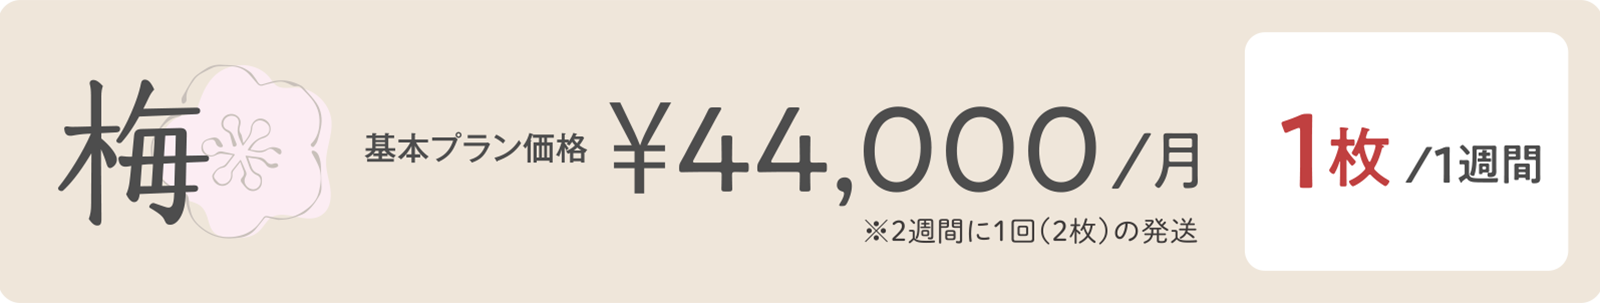 梅　基本プラン価格¥44,000／月　1枚/１週間